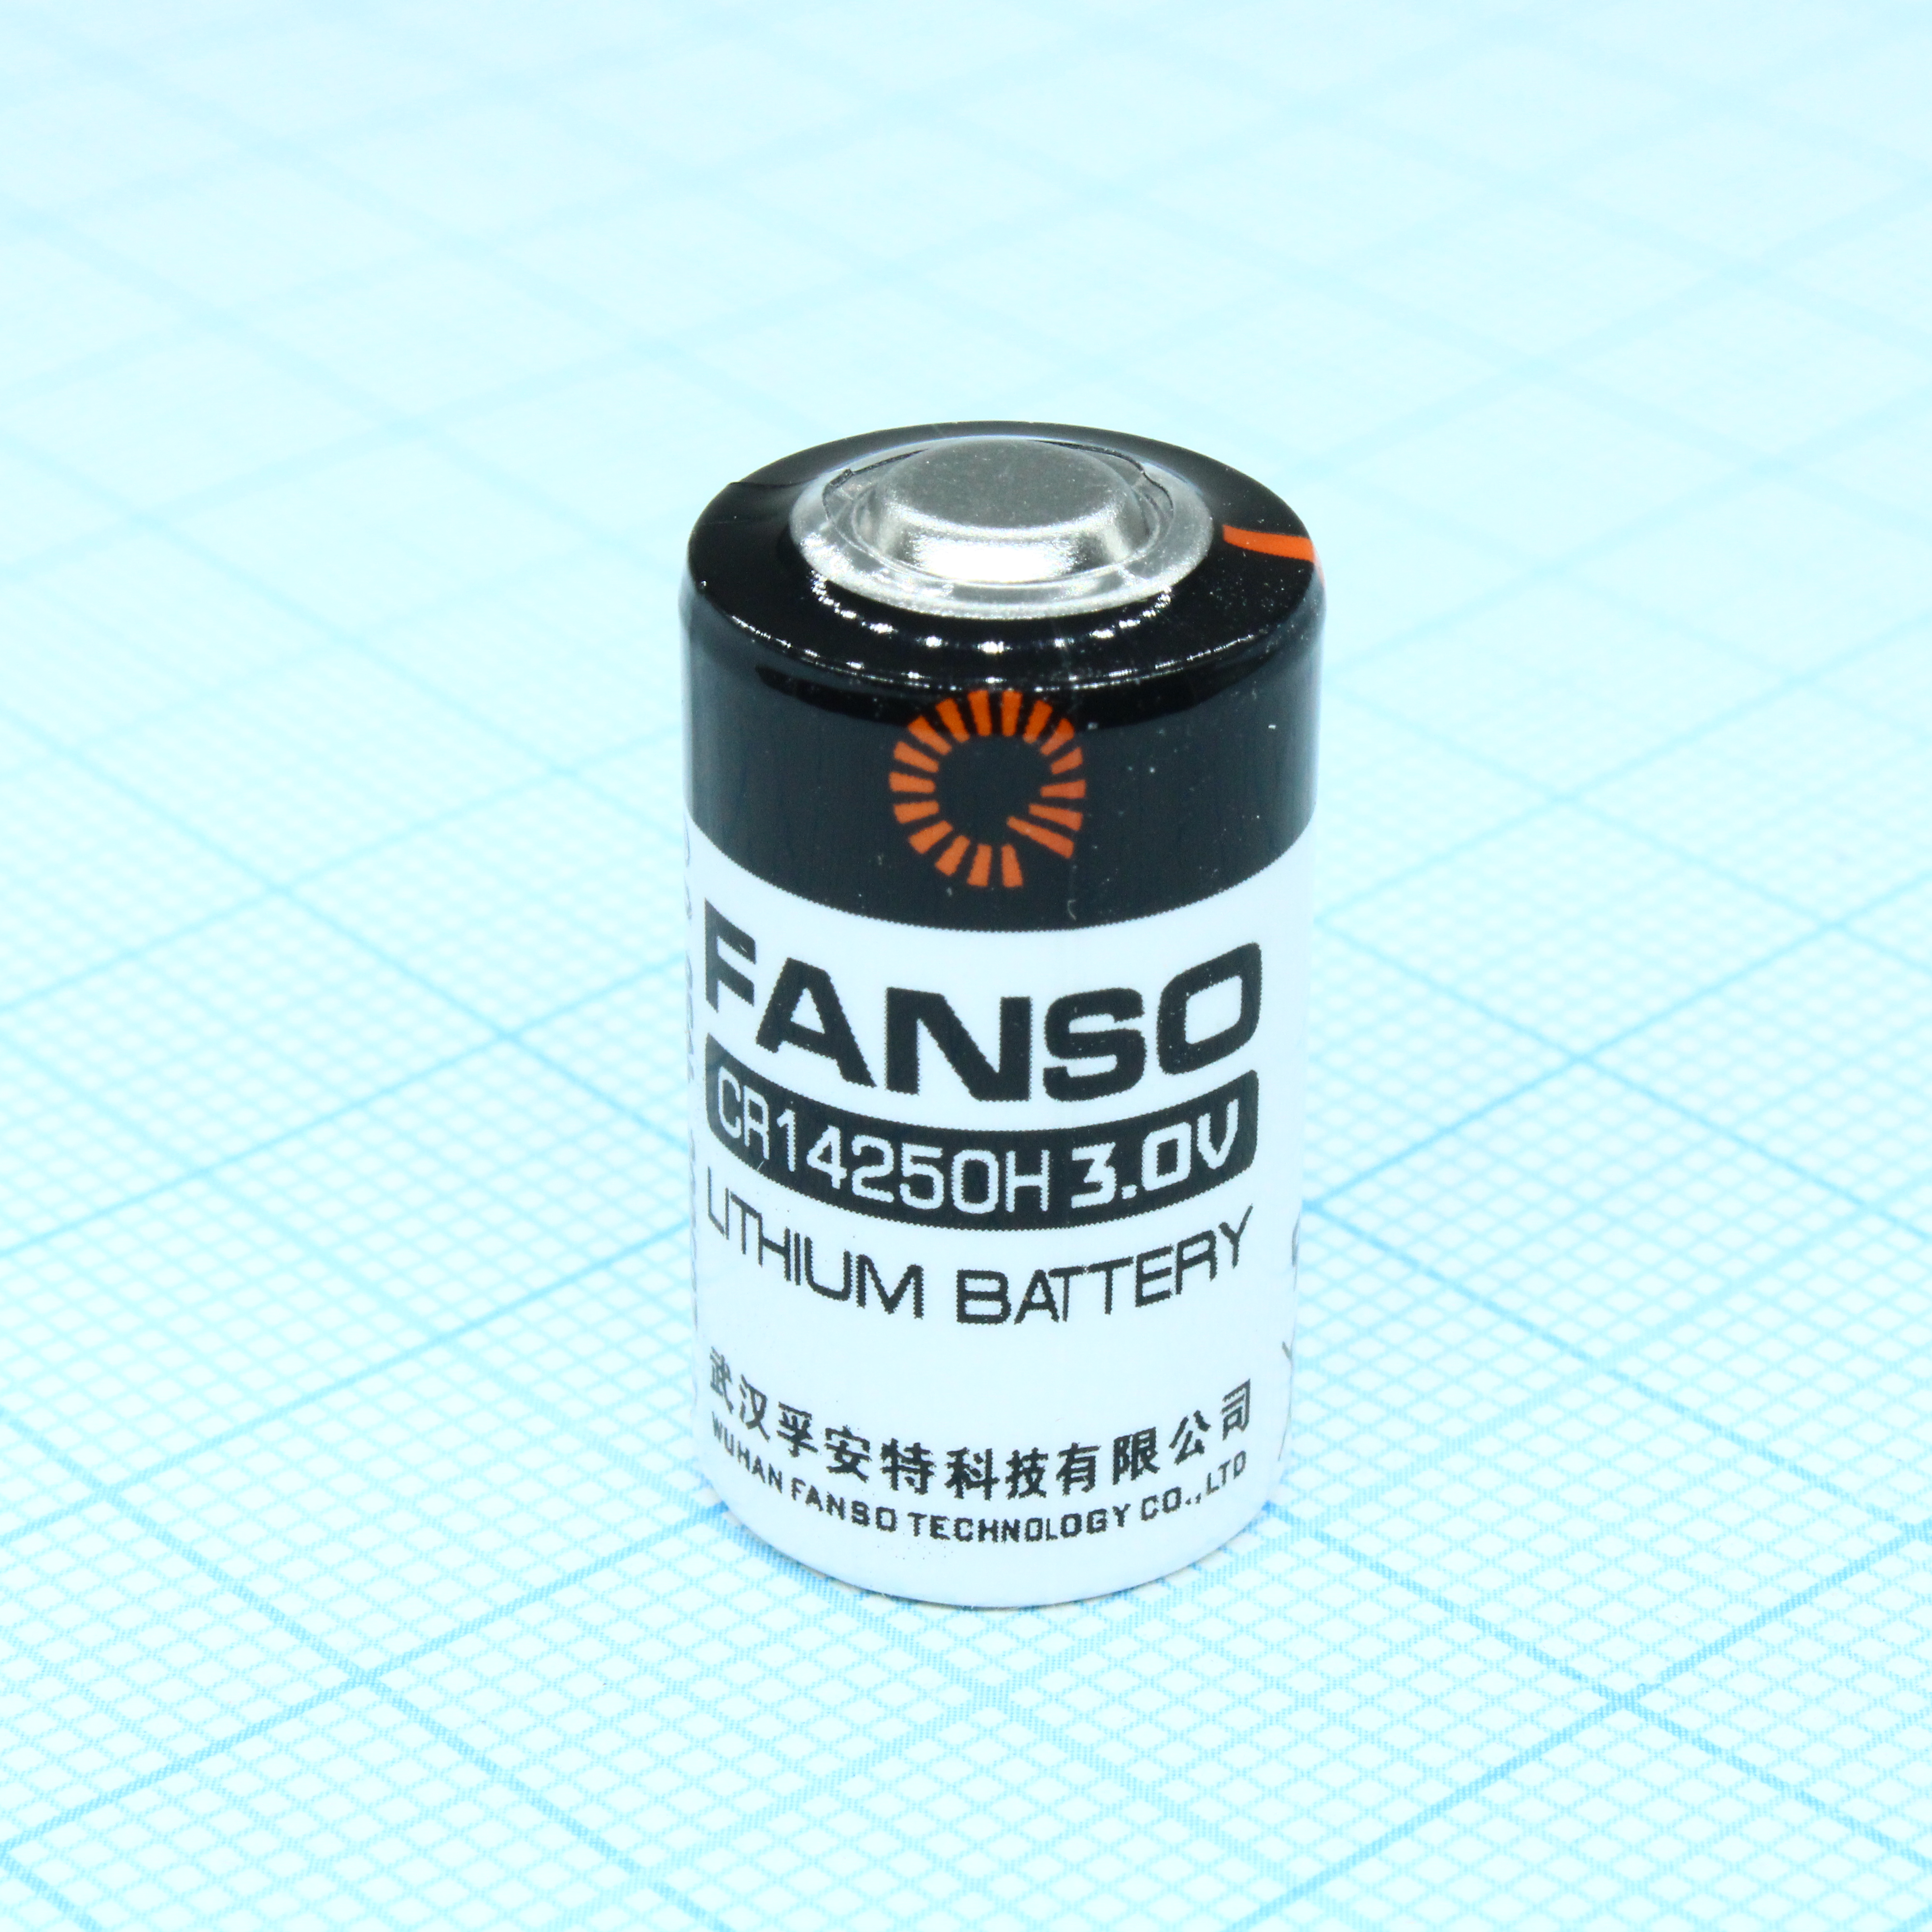 Батарейки CR14250H/S Fanso